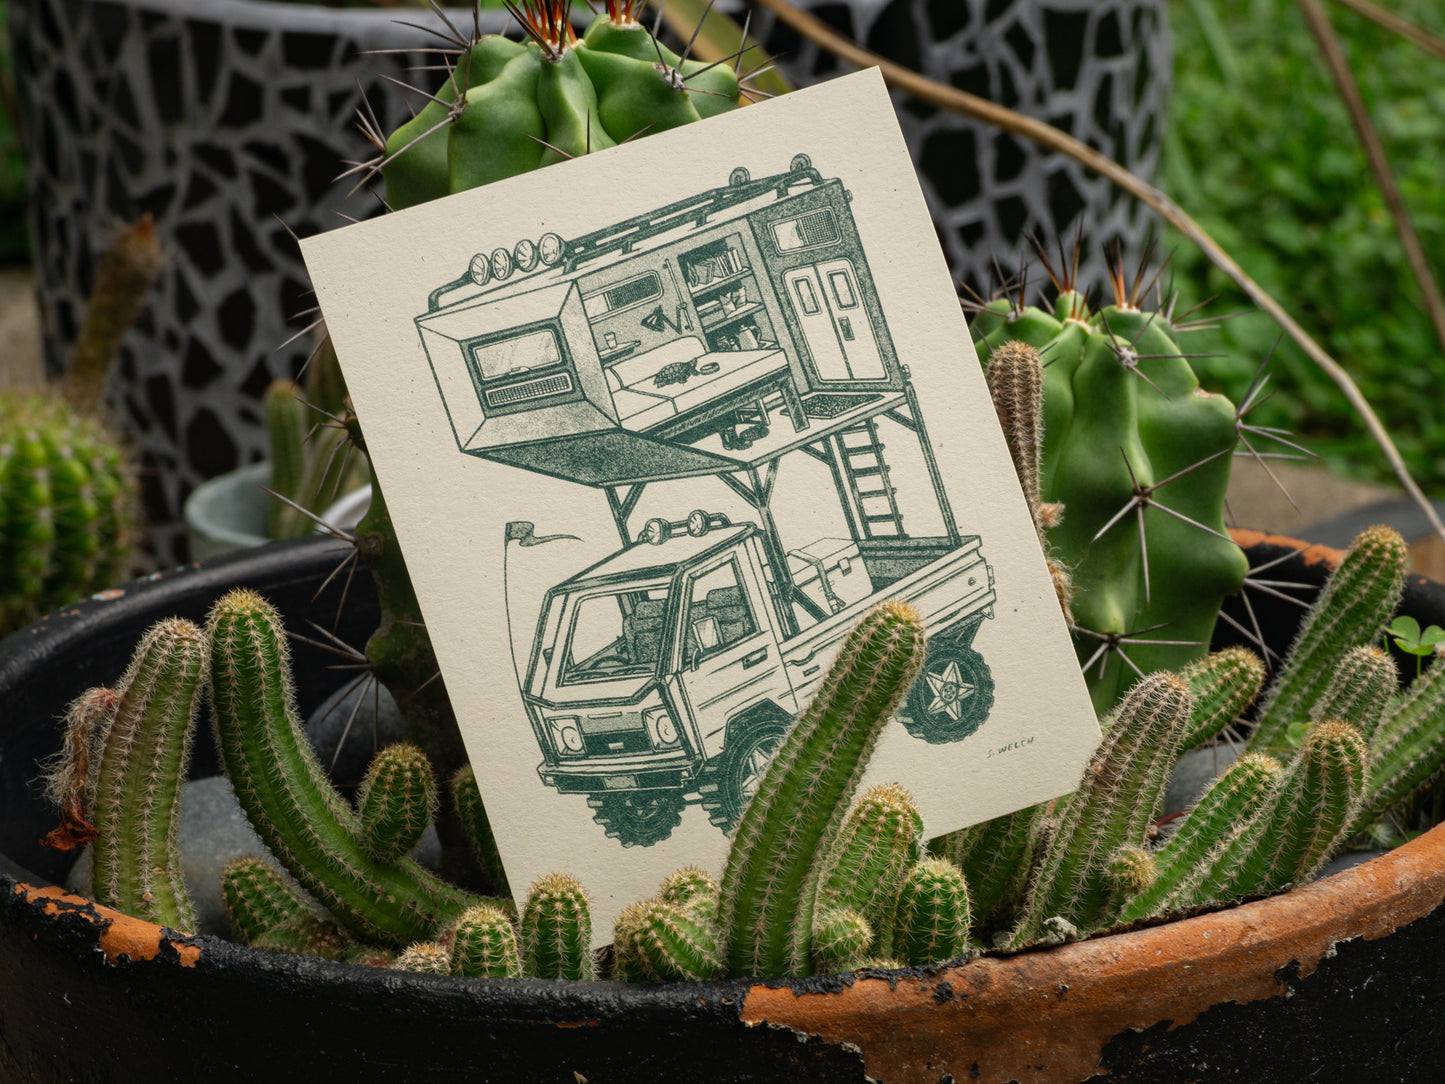 Small kei truck art print in a cactus pot.